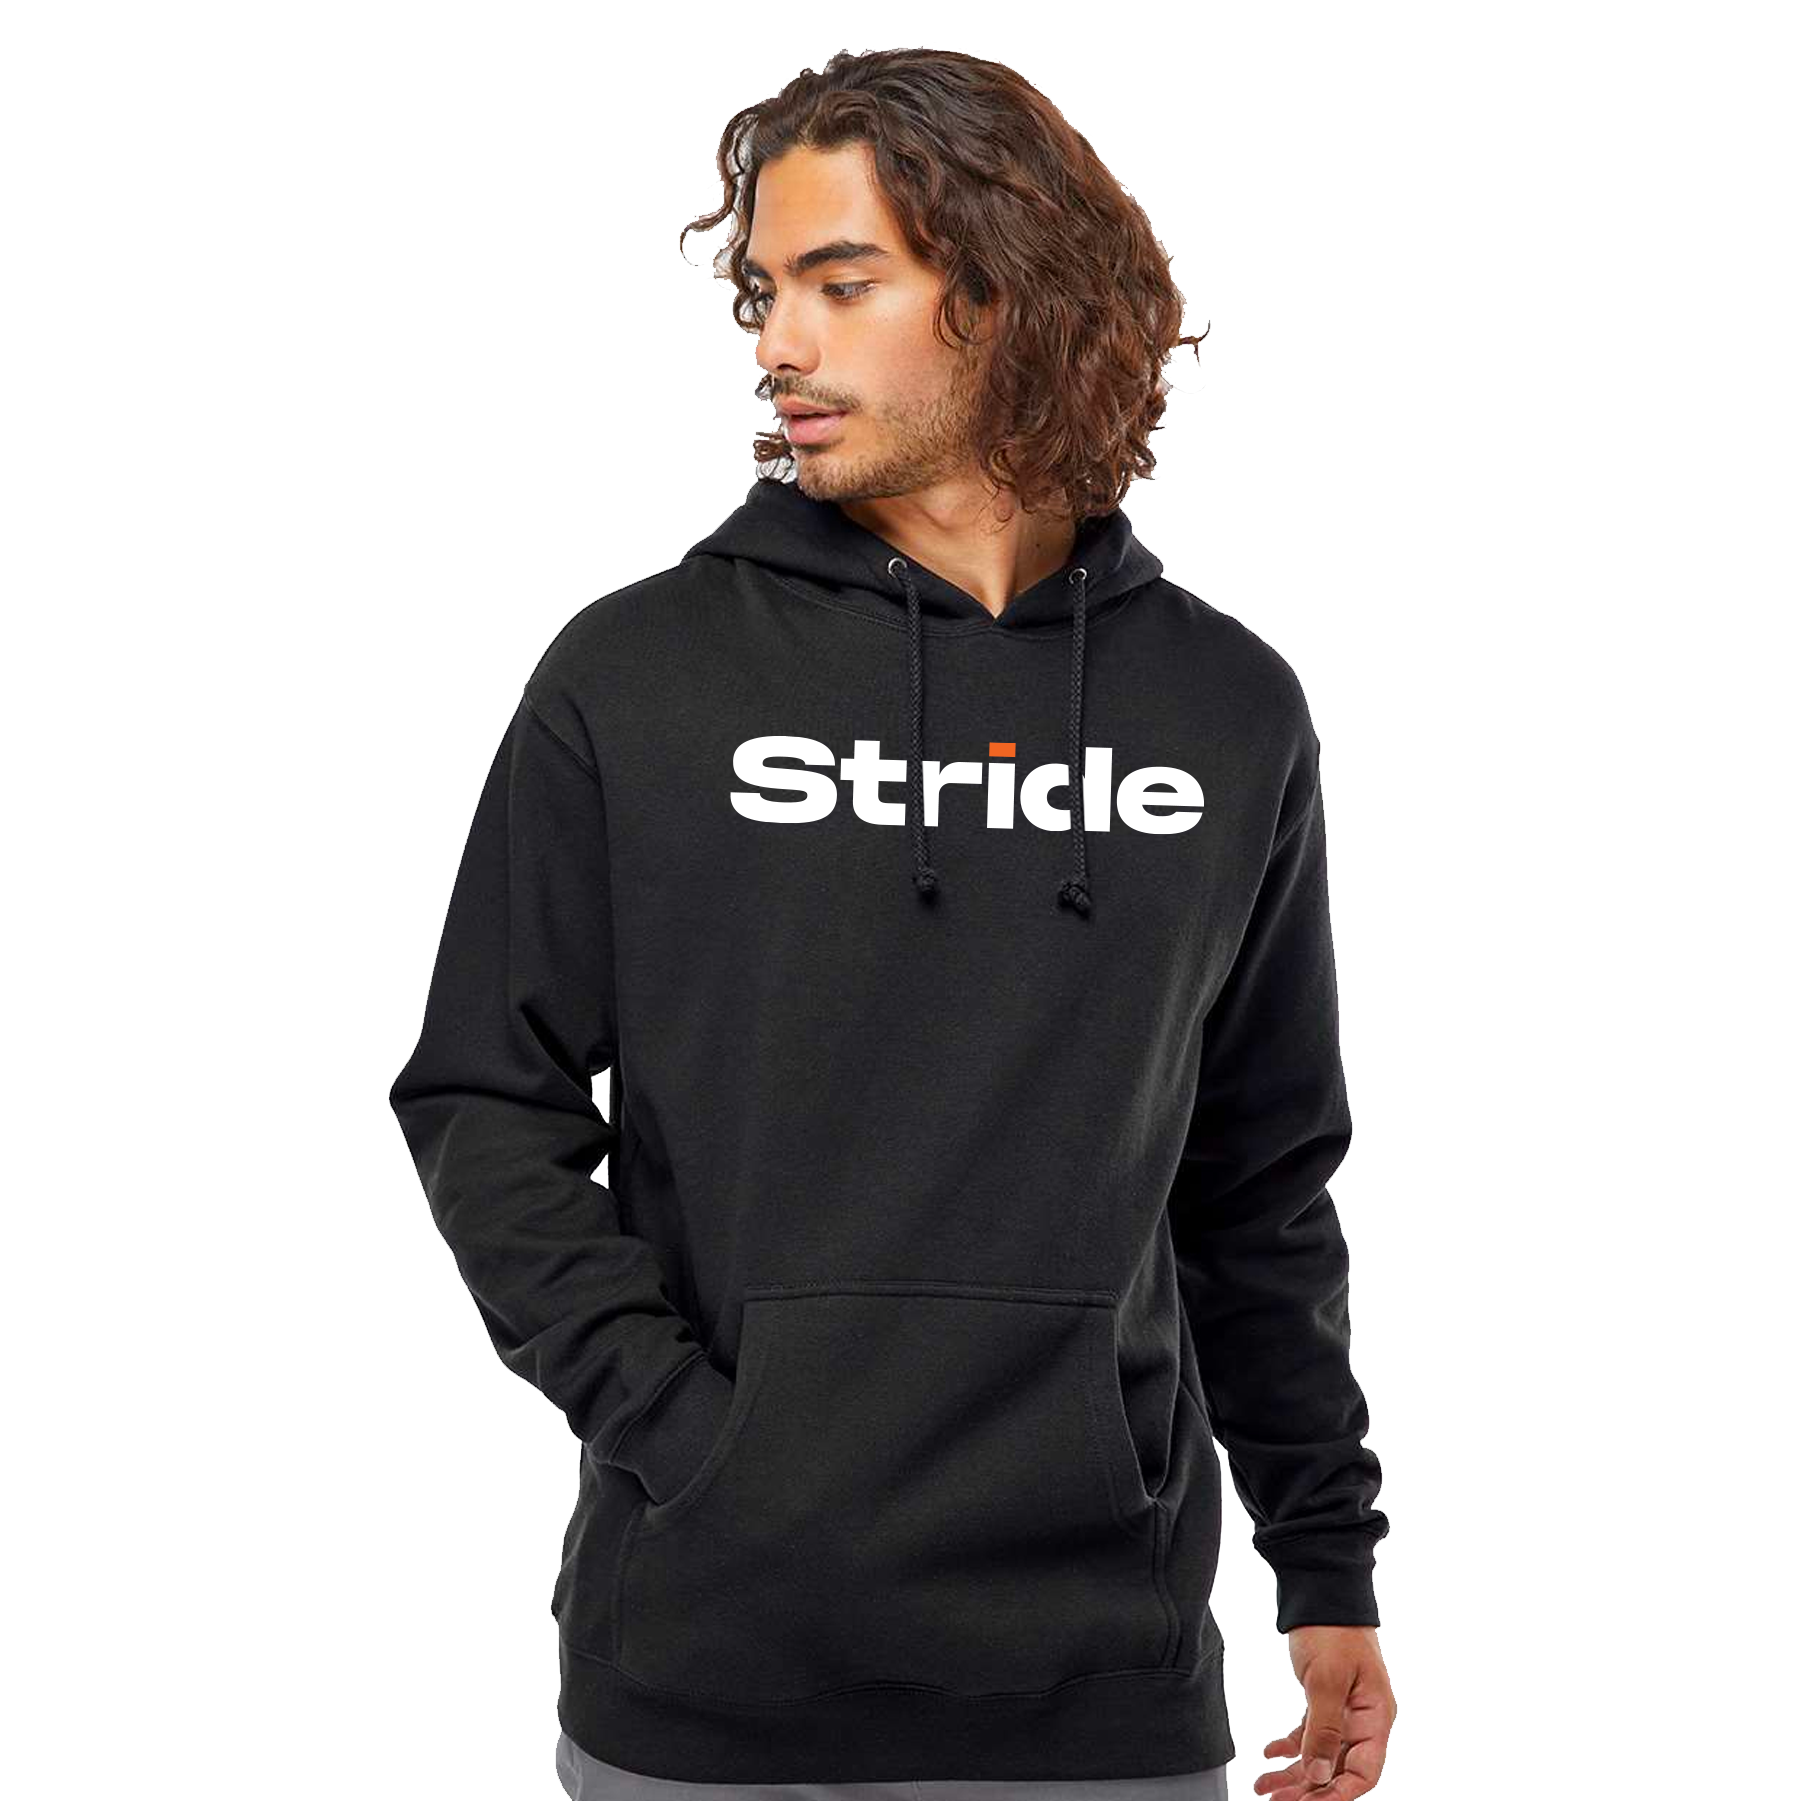 Purchase Stride Black Hoodie